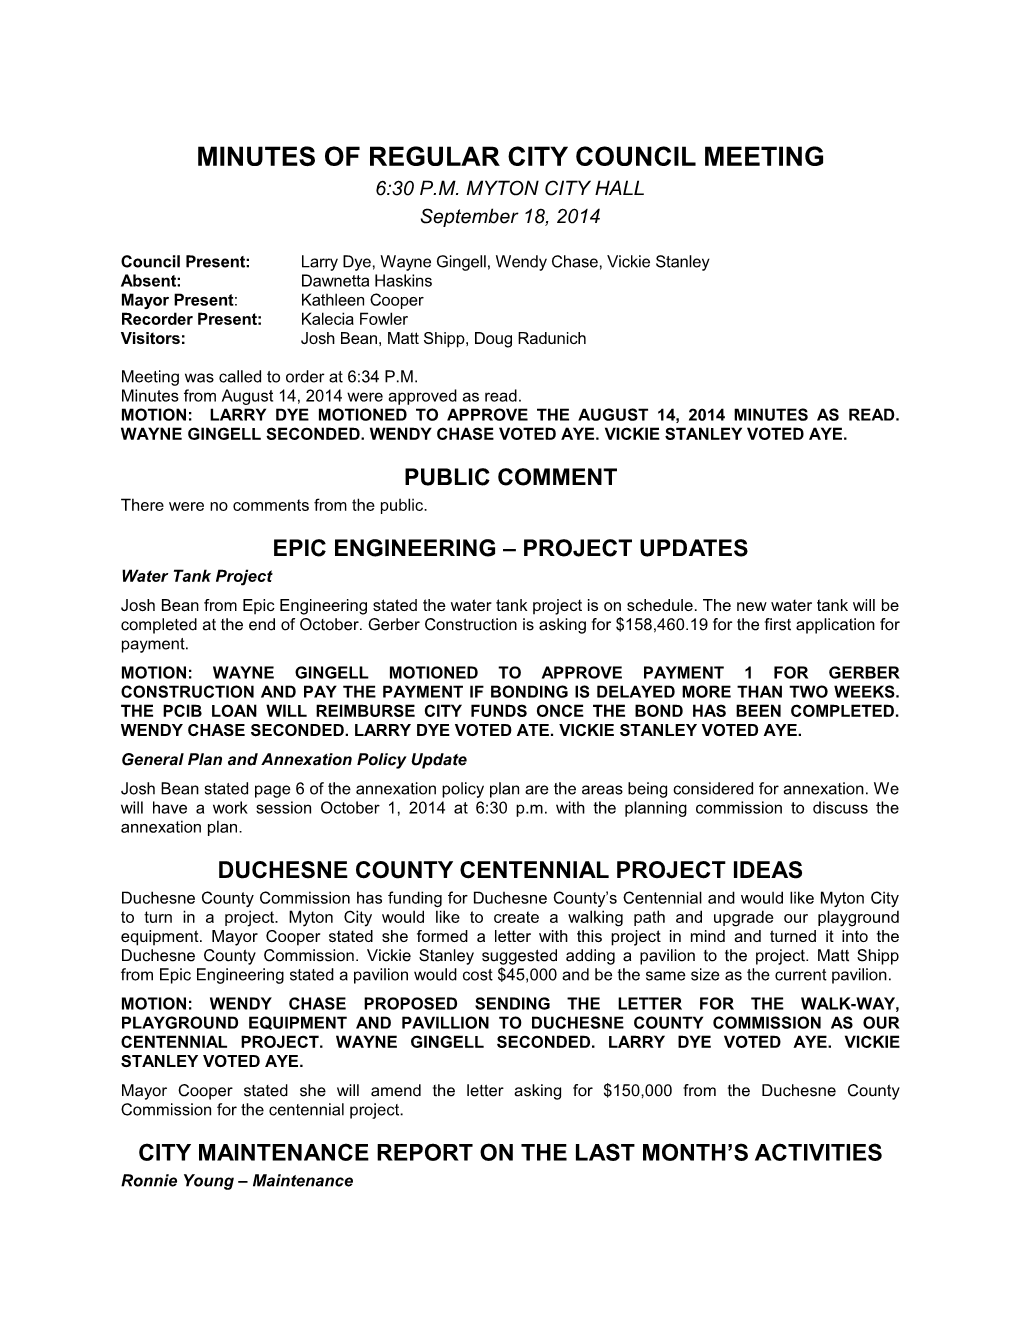 Minutes of Regular City Council Meeting s2